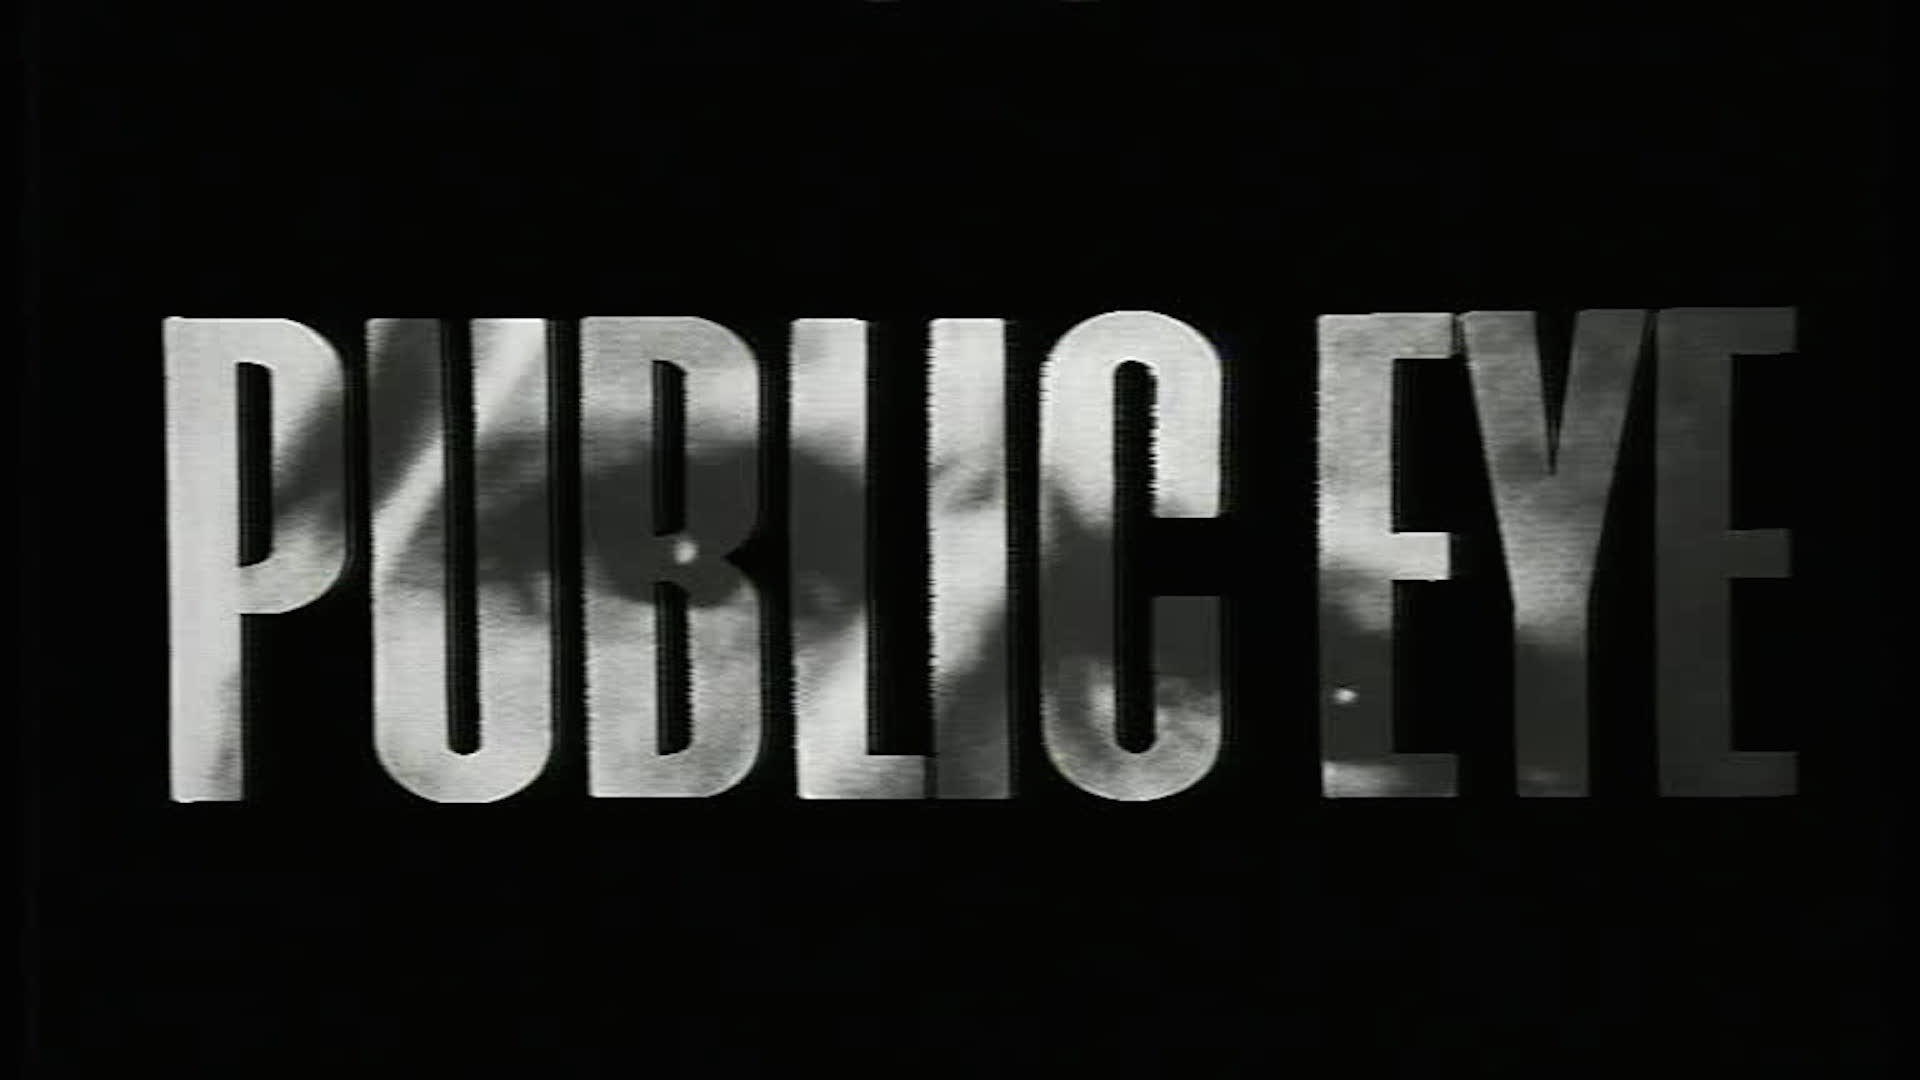 Сериал Public Eye (UK)